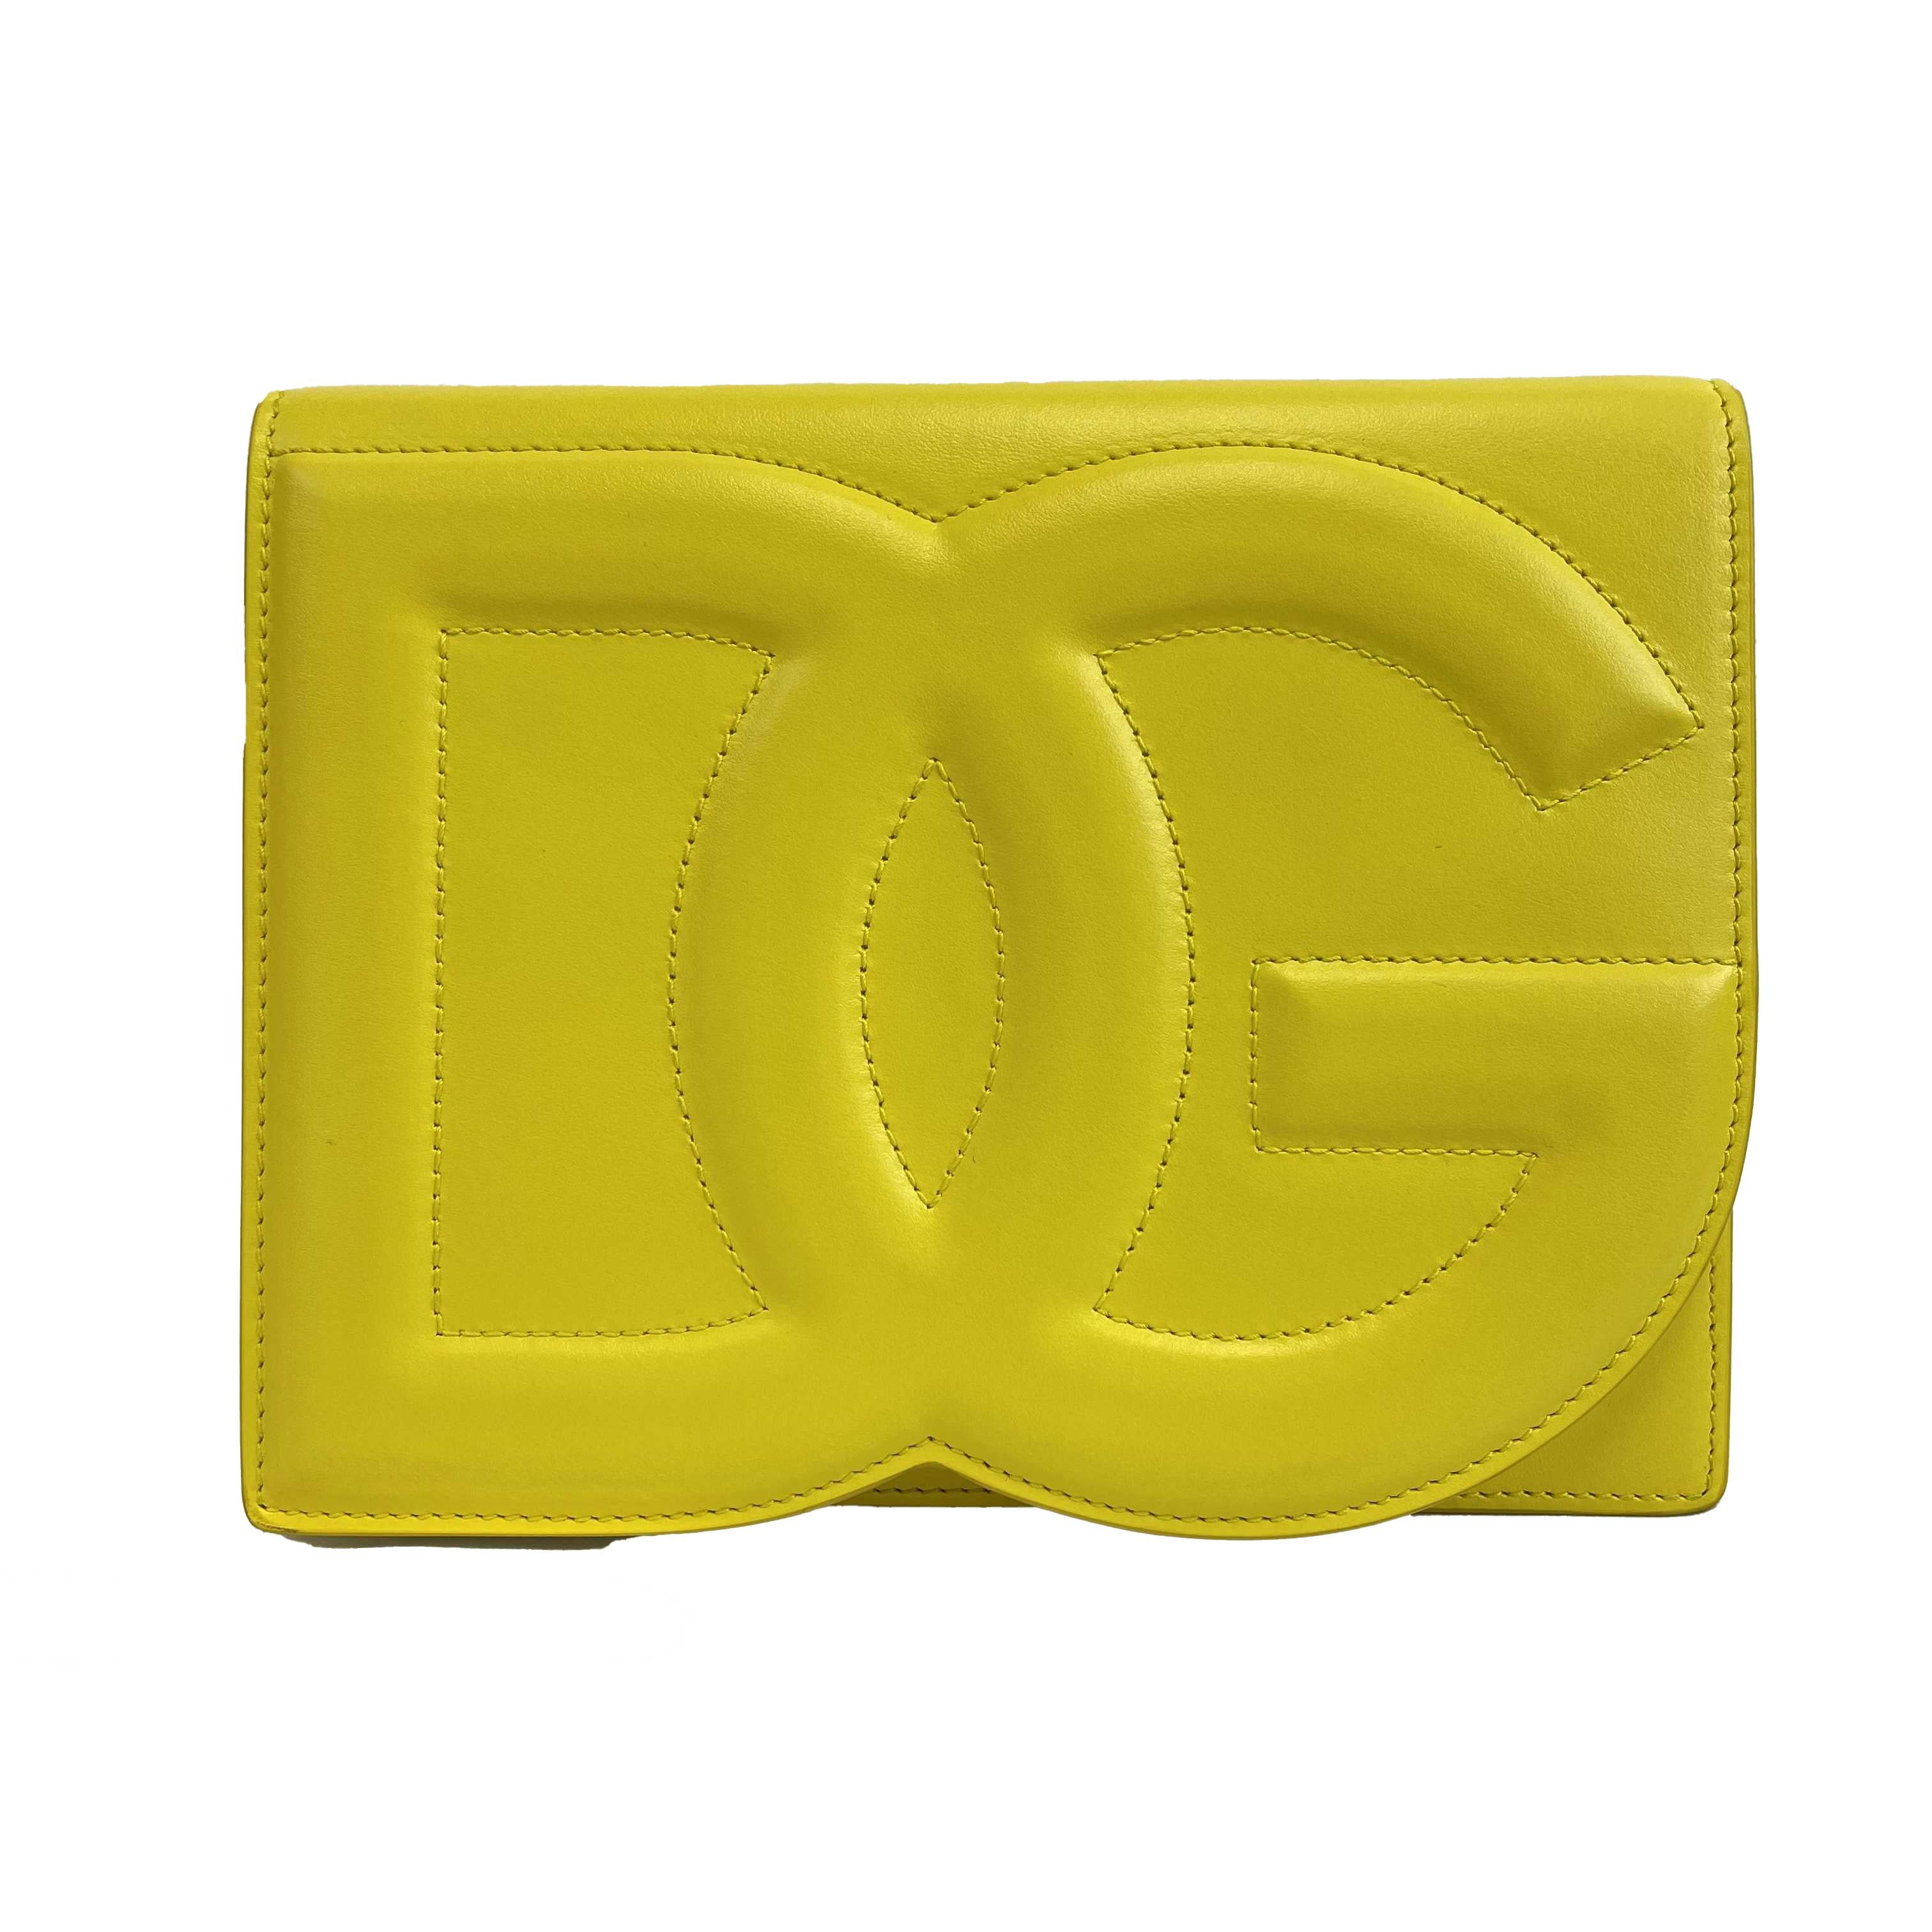 	Dolce & Gabbana - NEW DG Logo Yellow Crossbody / Shoulder Bag 8